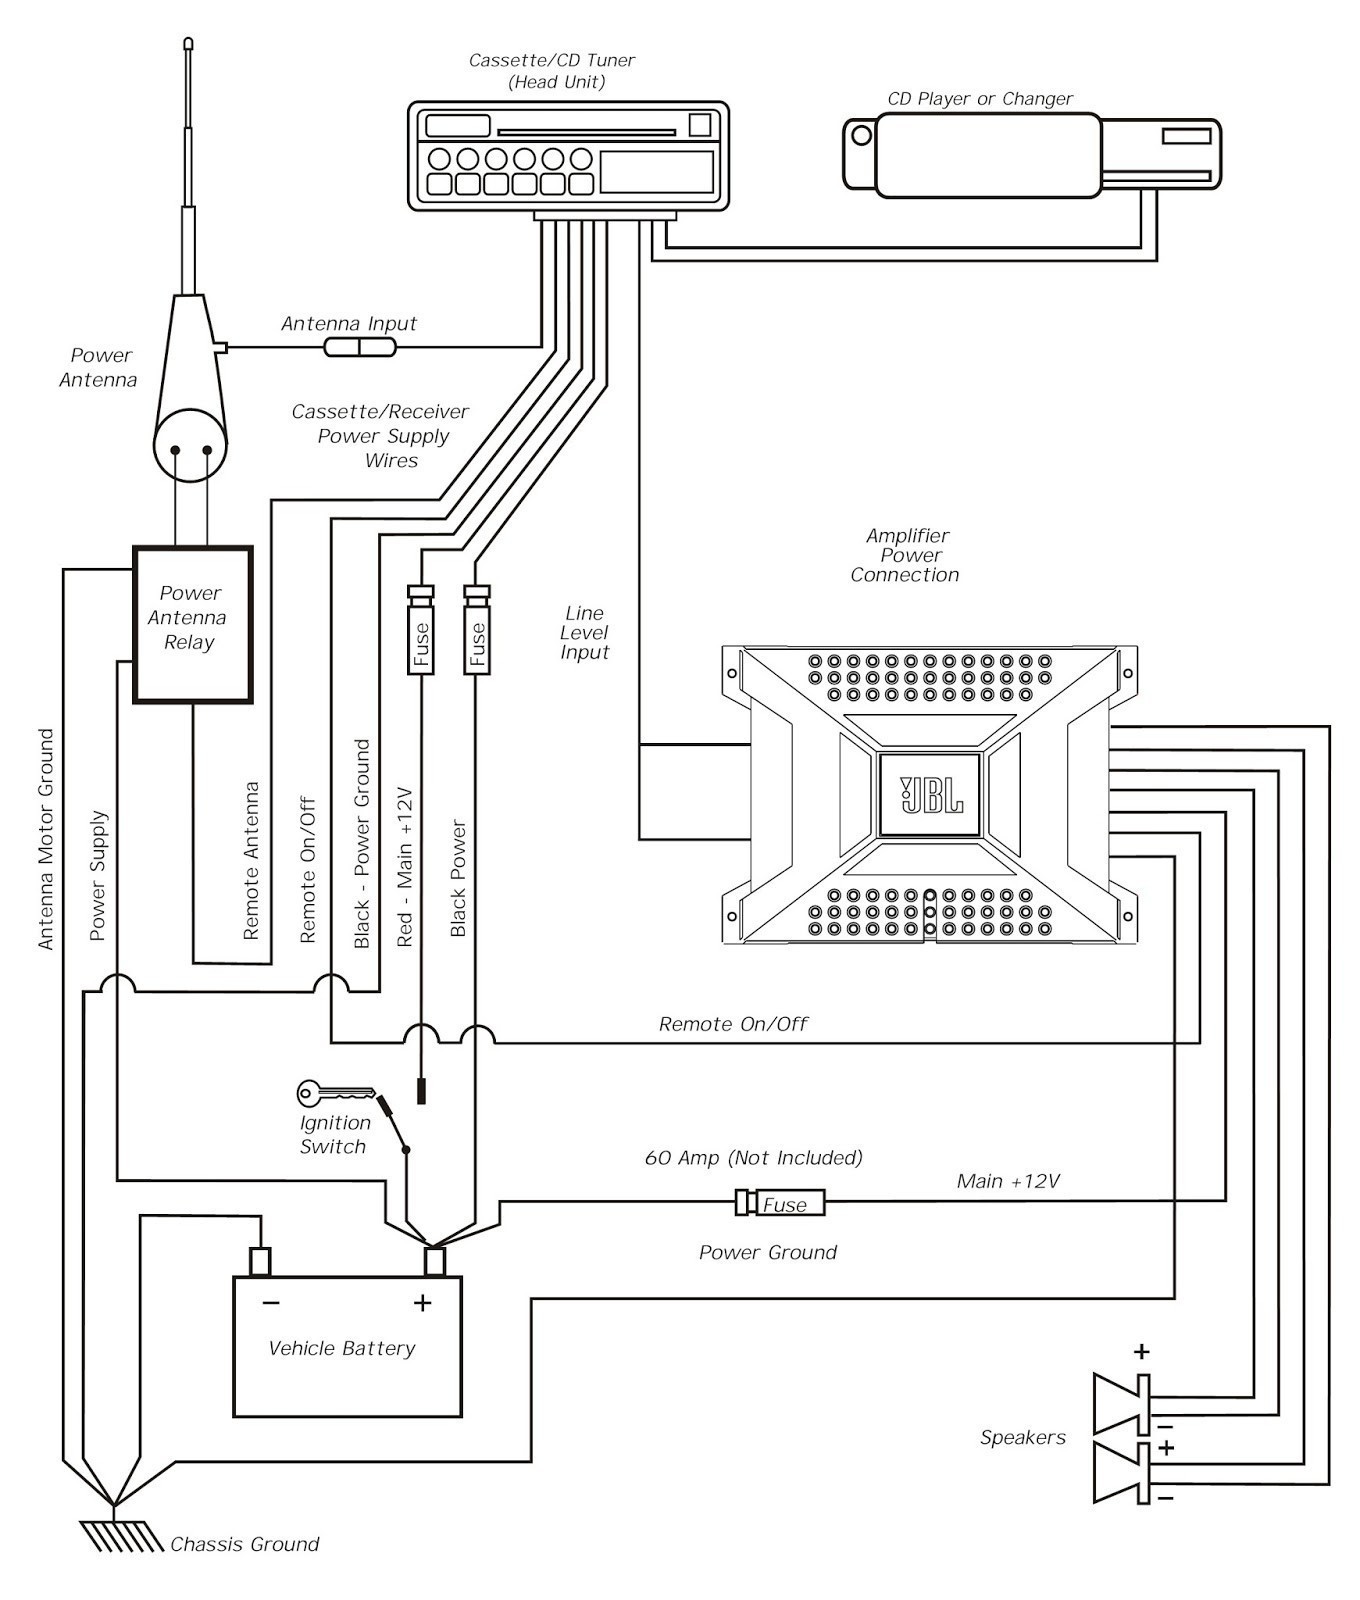 Guitar Speaker Wiring Diagram New Wiring Diagram for Ibanez Blazer Guitar Inspirationa Wiring Diagram